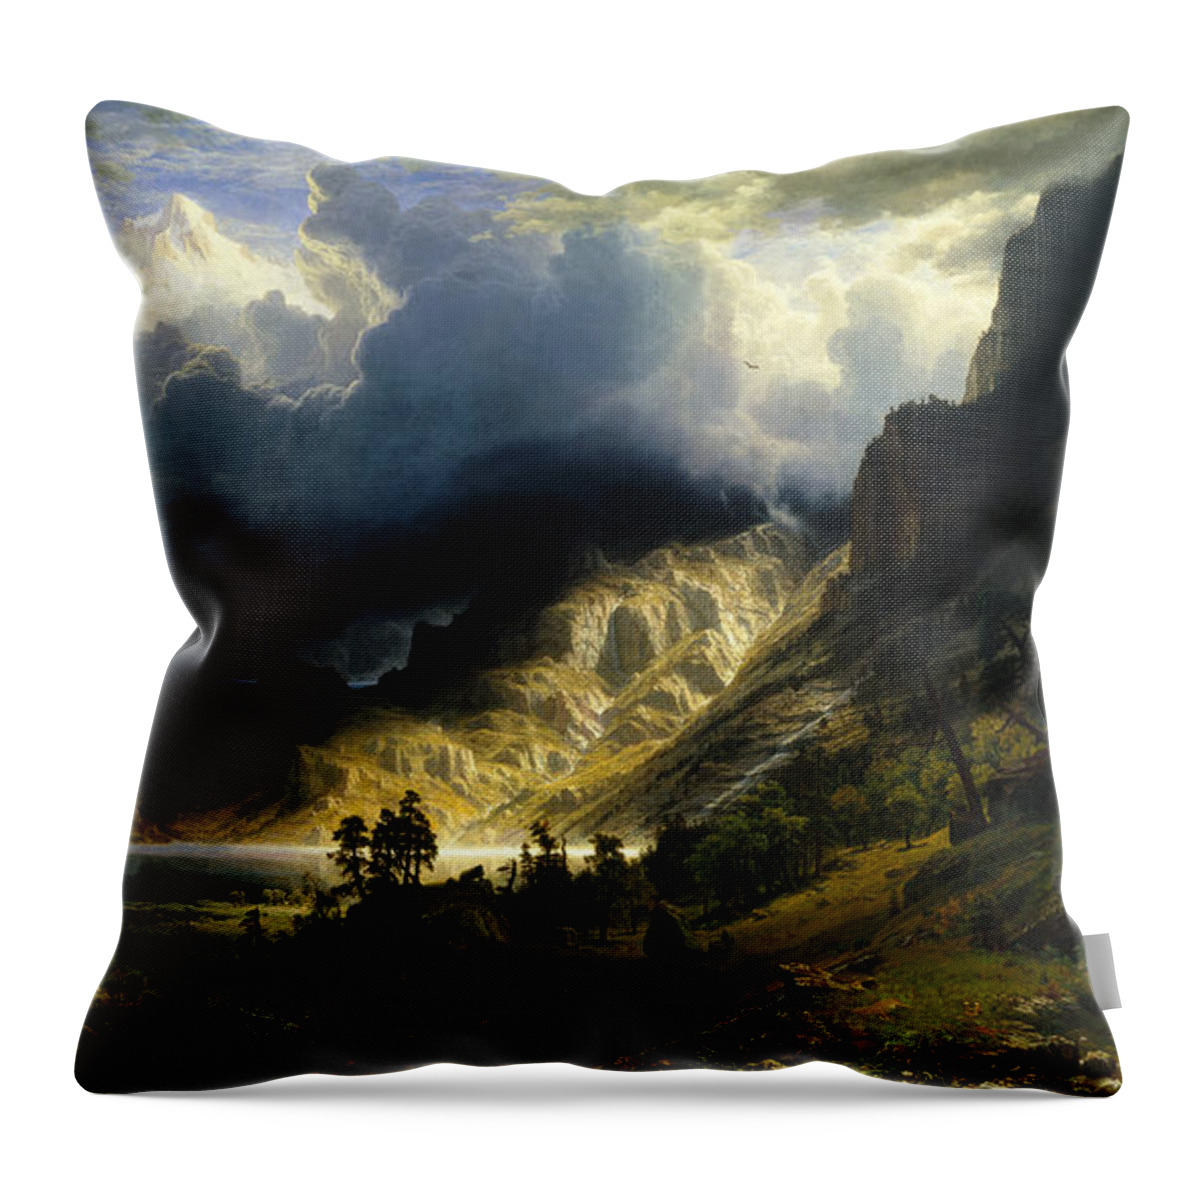 A Storm In The Rocky Mountains Throw Pillow featuring the painting A Storm in the Rocky Mountains by Albert Bierstadt